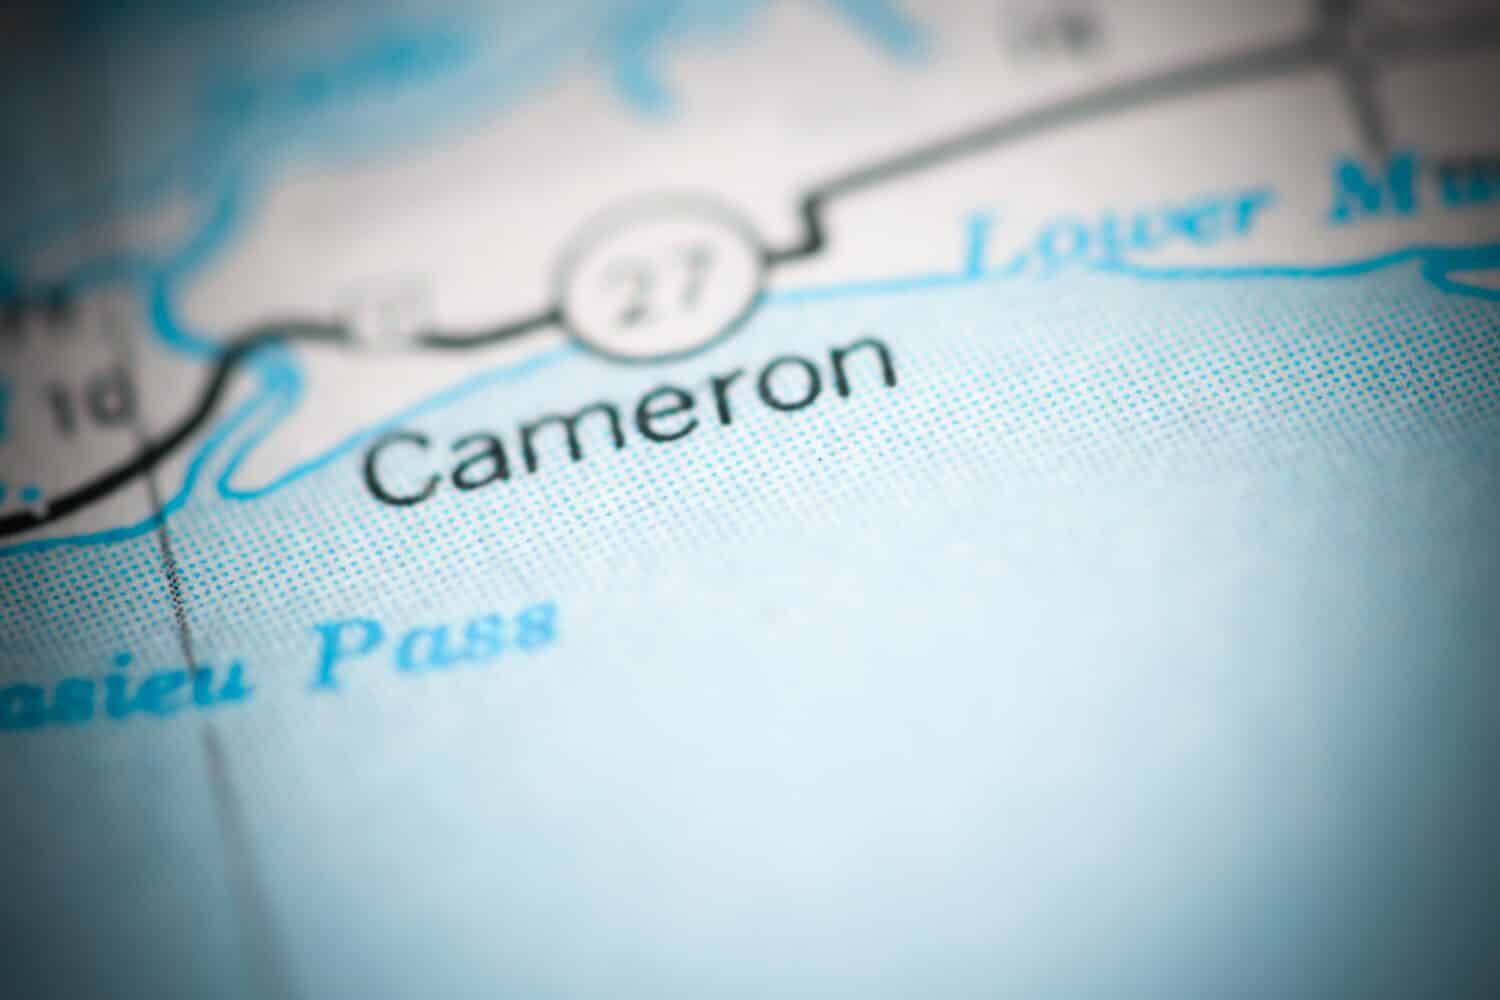 Cameron. Louisiana. USA on a geography map